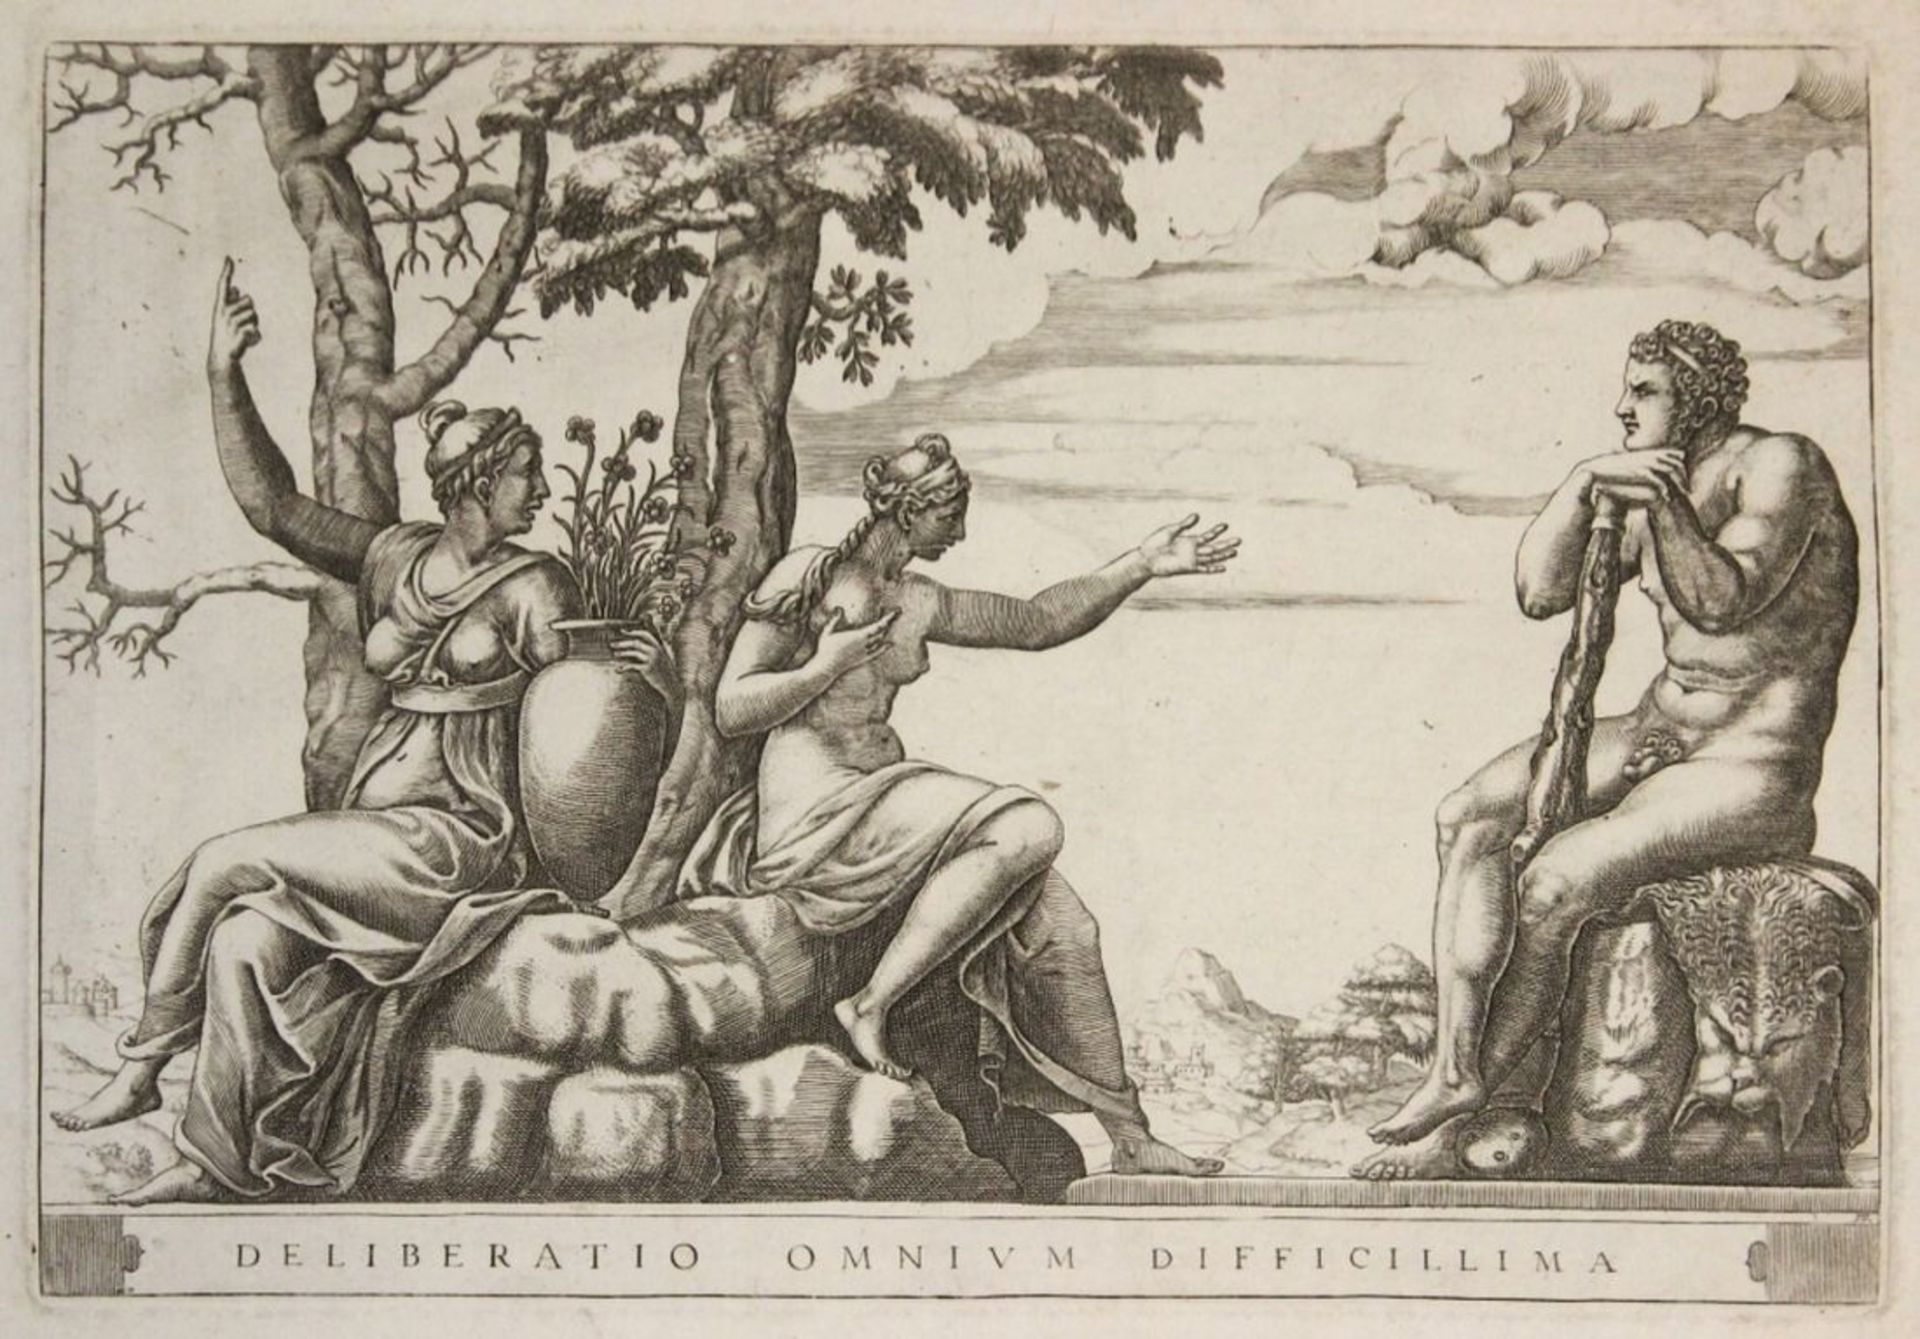 Kupferstich - Adamo SCULTORI (Italien / Mantua c.1530-1585) "Deliberatio Omnium Difficillima", r.